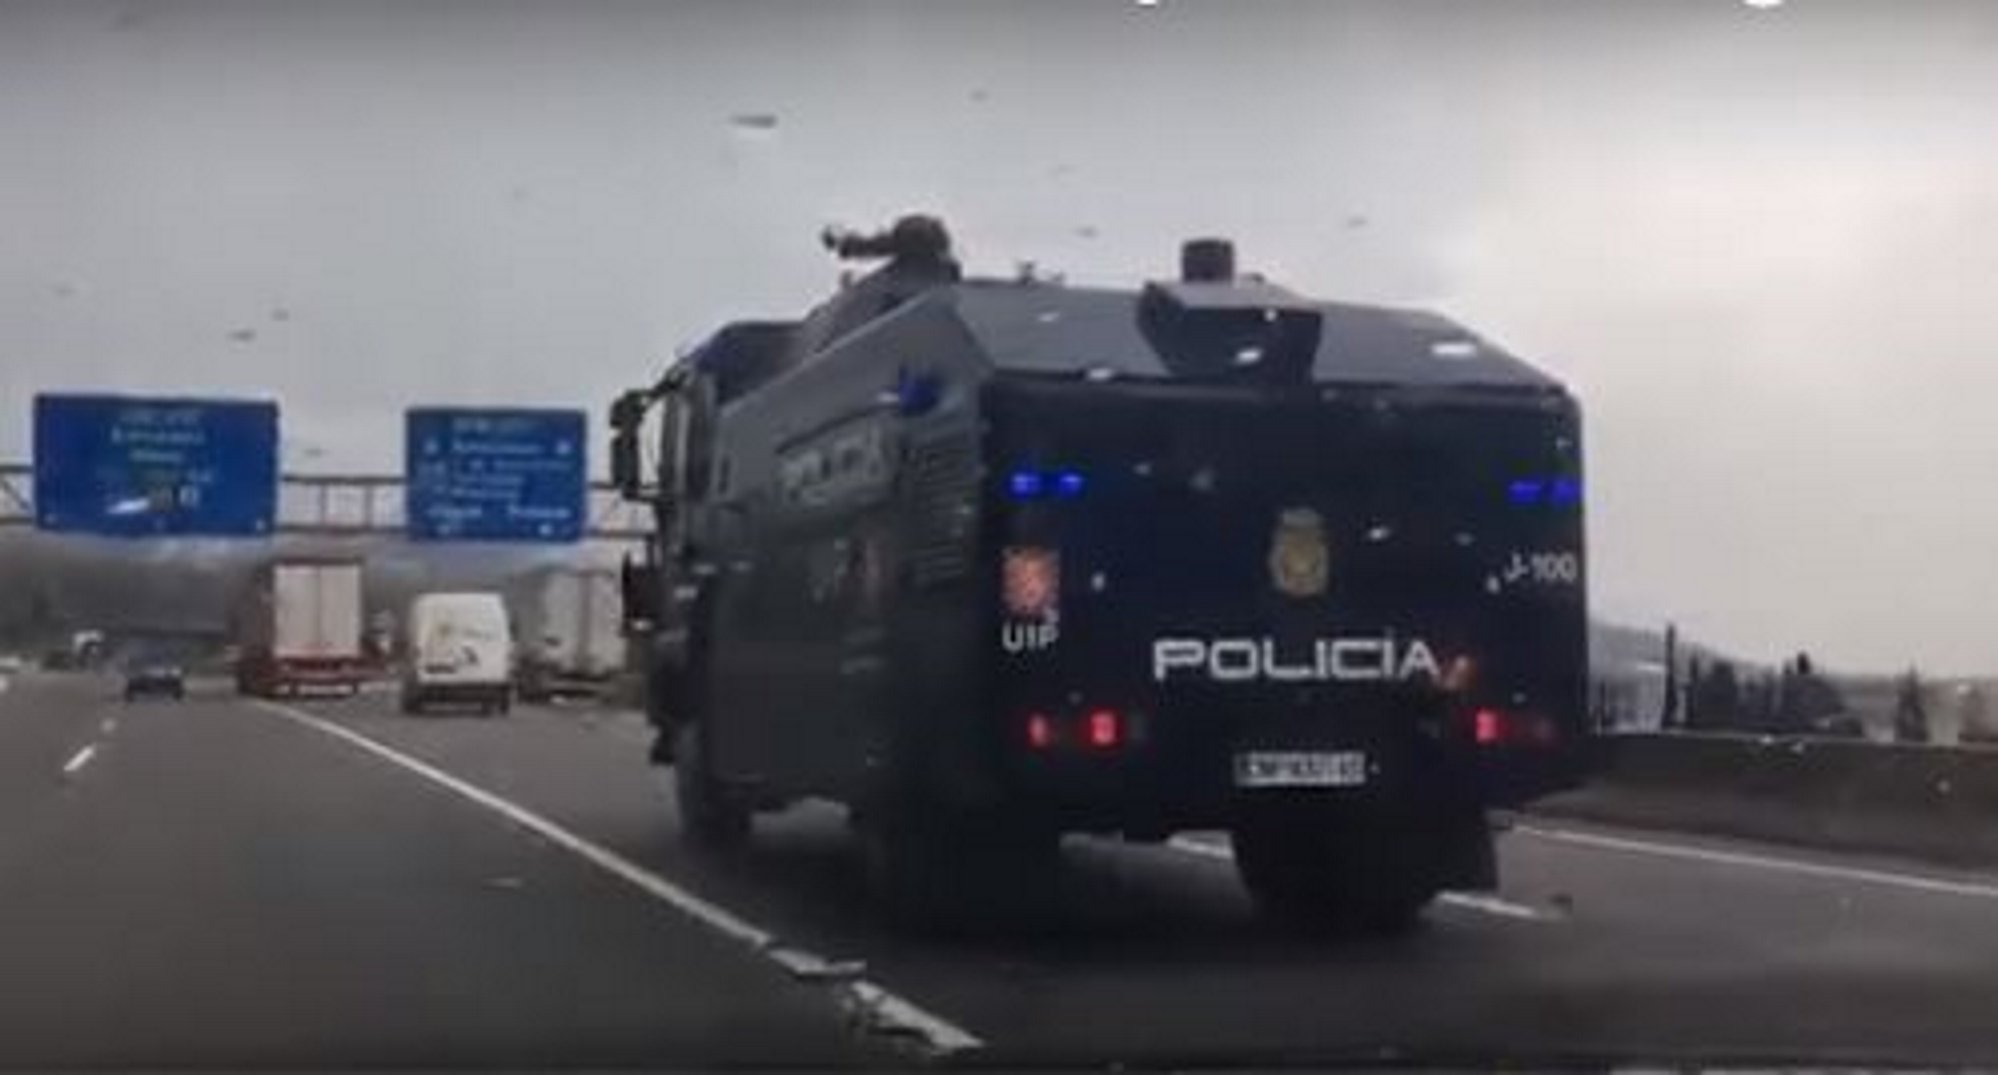 Zoido envia a Barcelona el gran camió antiavalots que va dur a la frontera de Ceuta